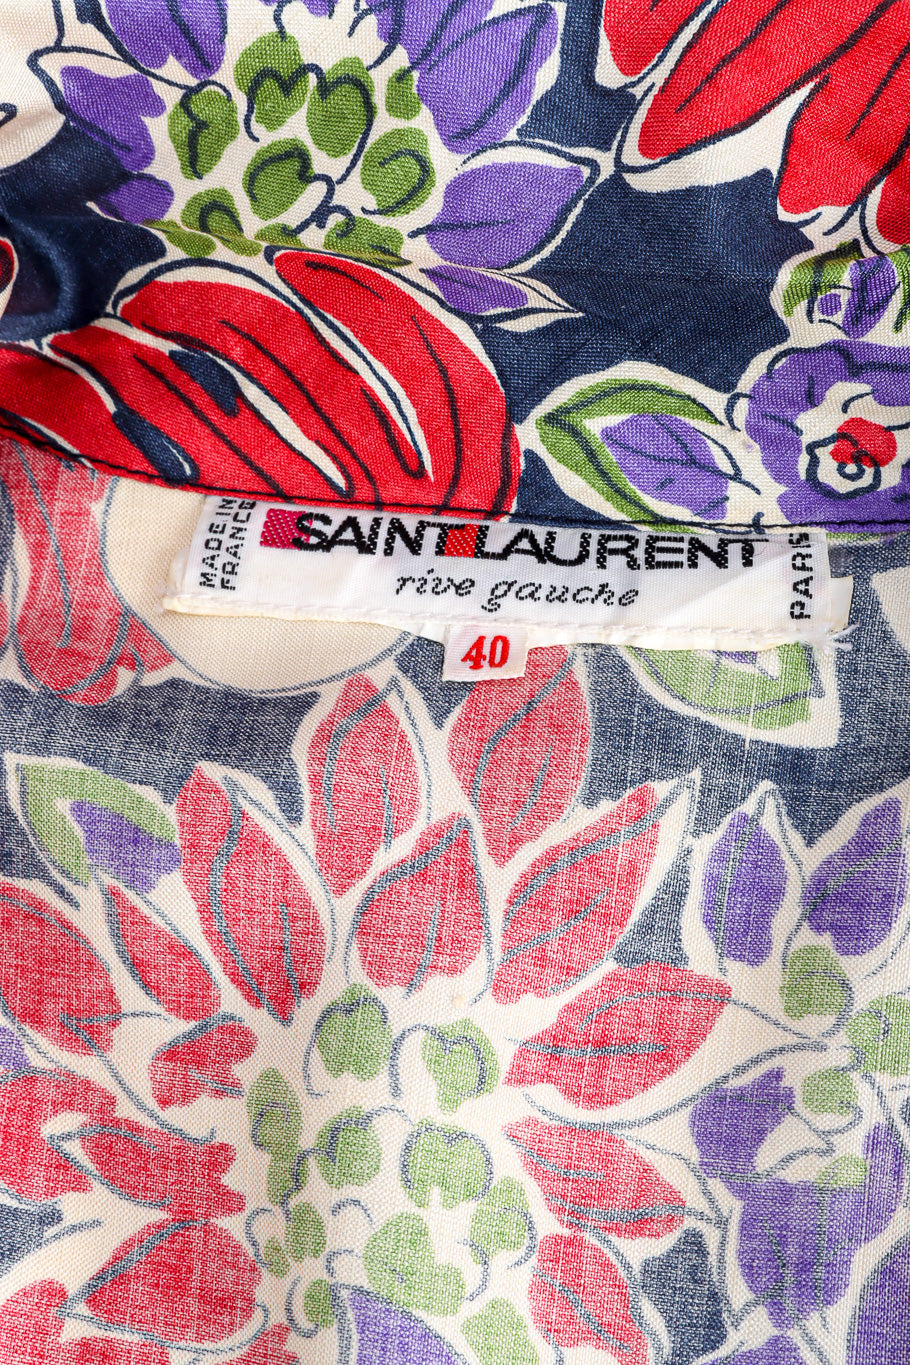 Multi-printed midi length dress by Yves Saint Laurent Label Close-up @recessla